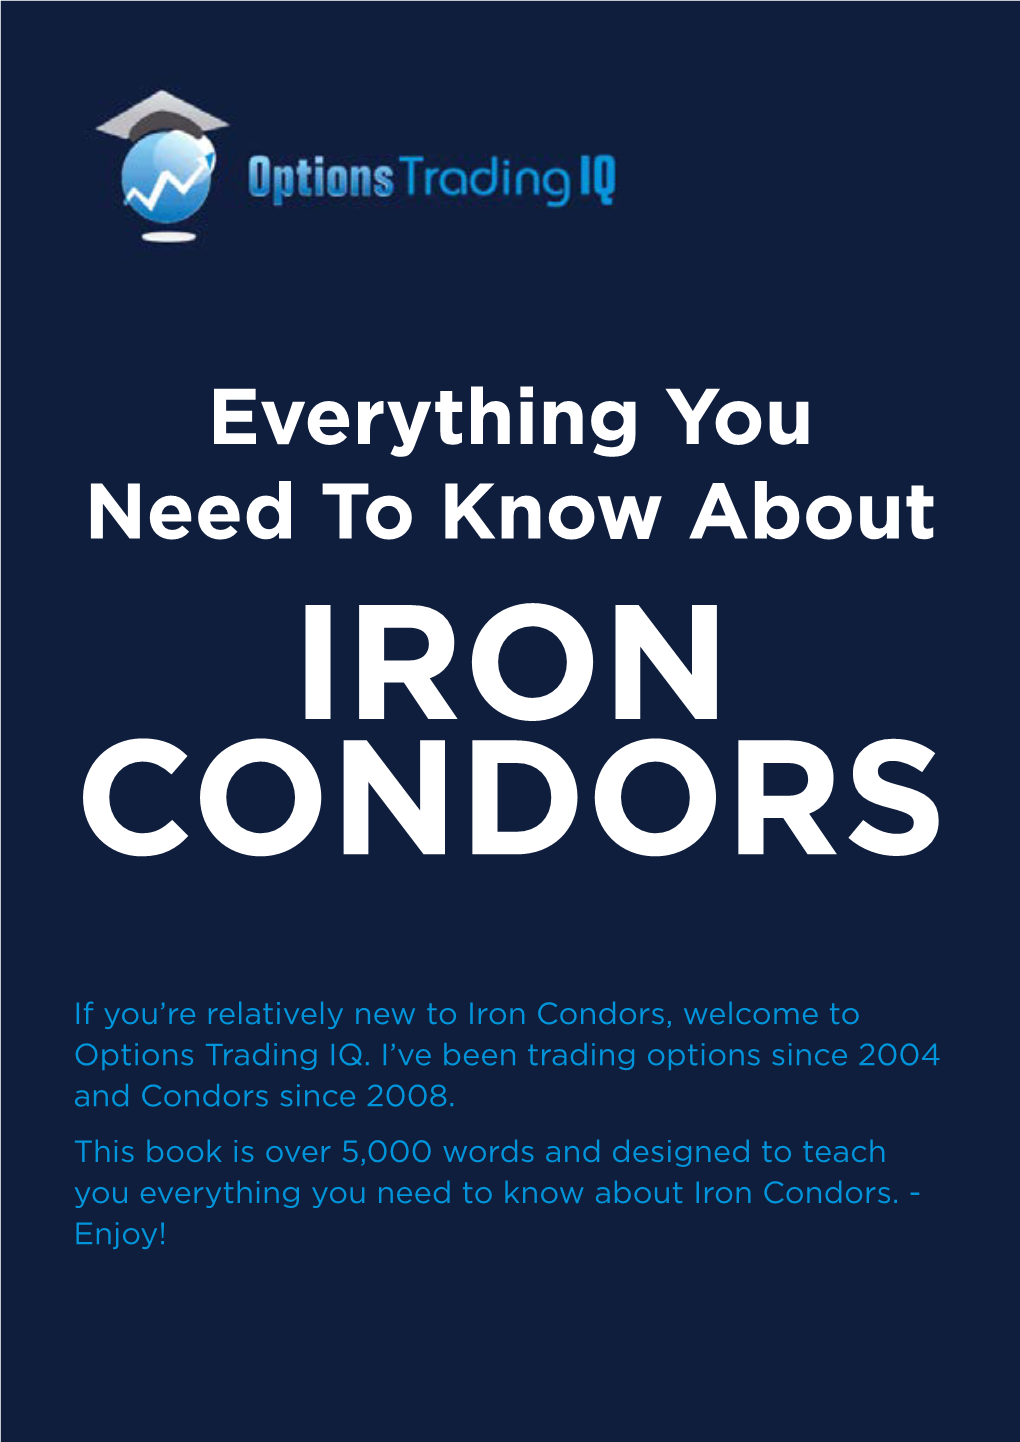 Download the Iron Condor